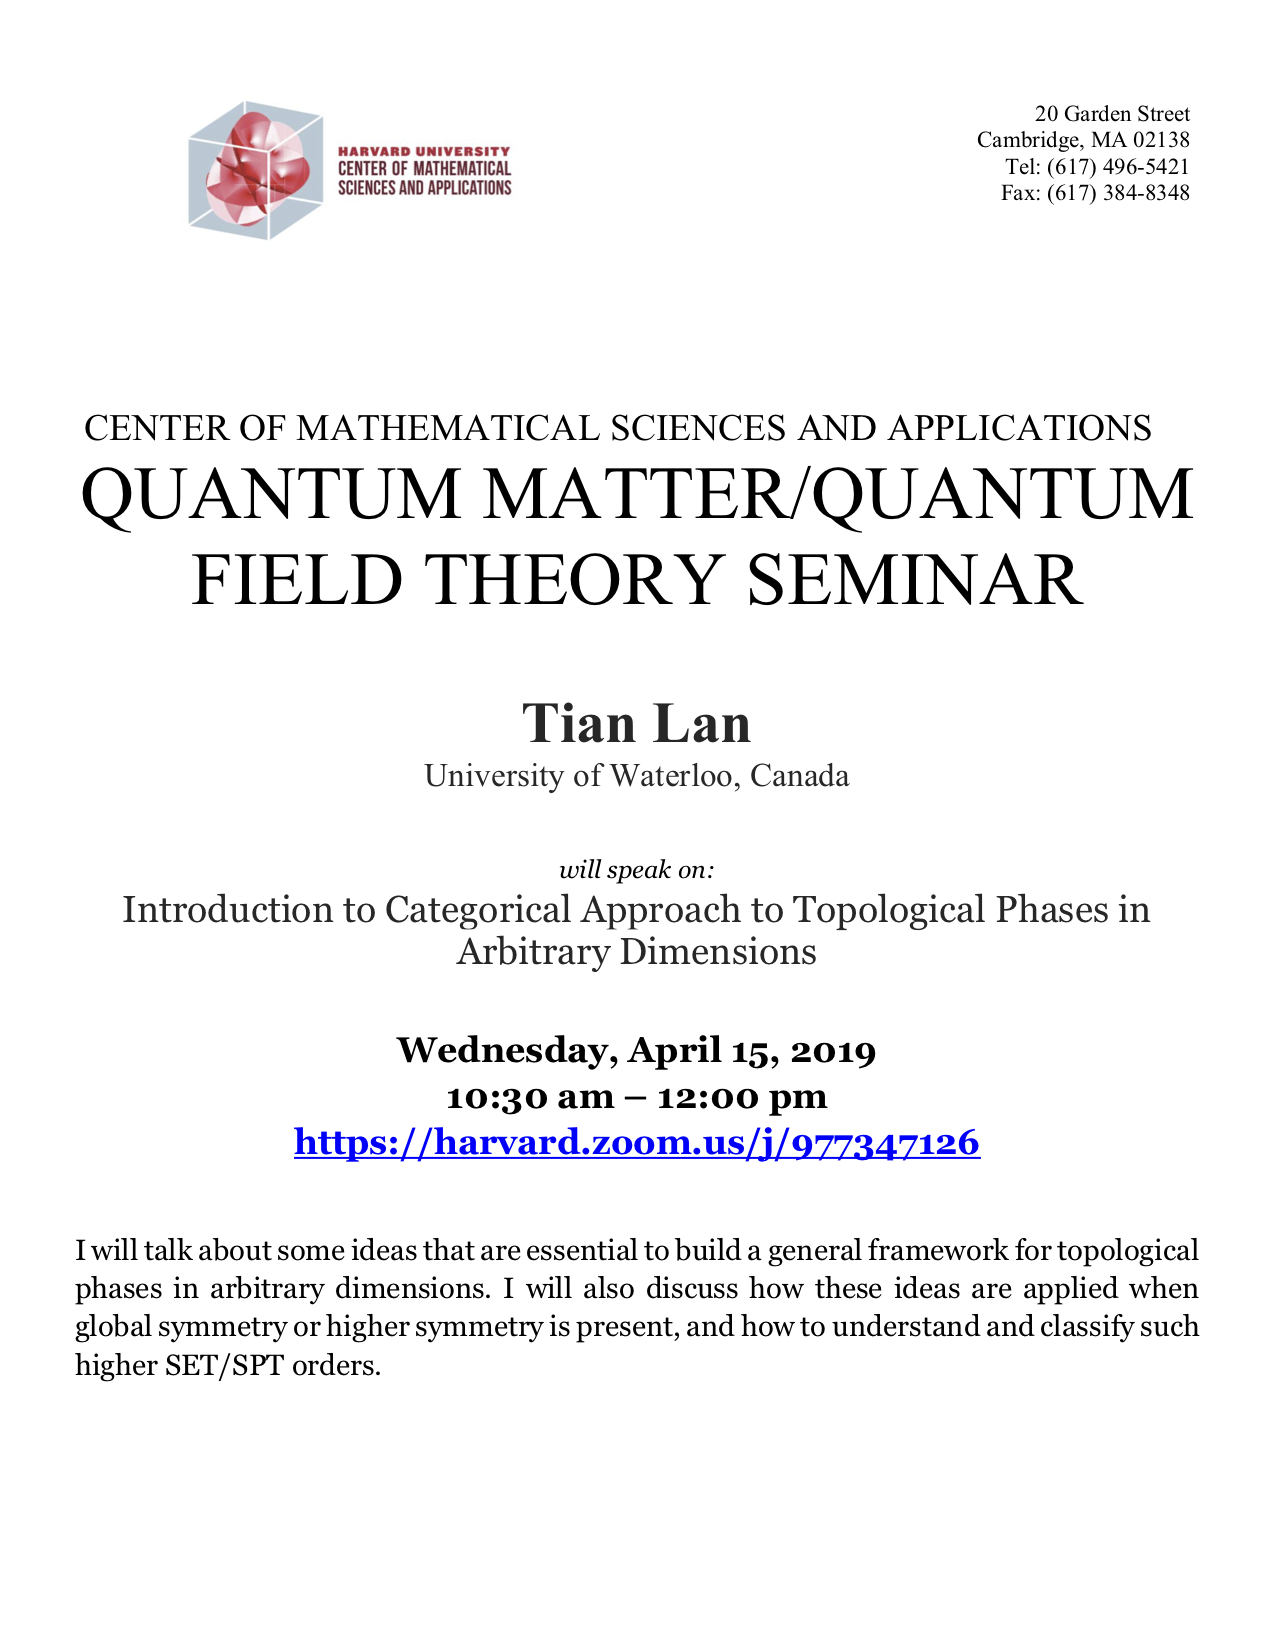 CMSA-Quantum-Matter_Quantum-Field-Theory-seminar-04.15.20